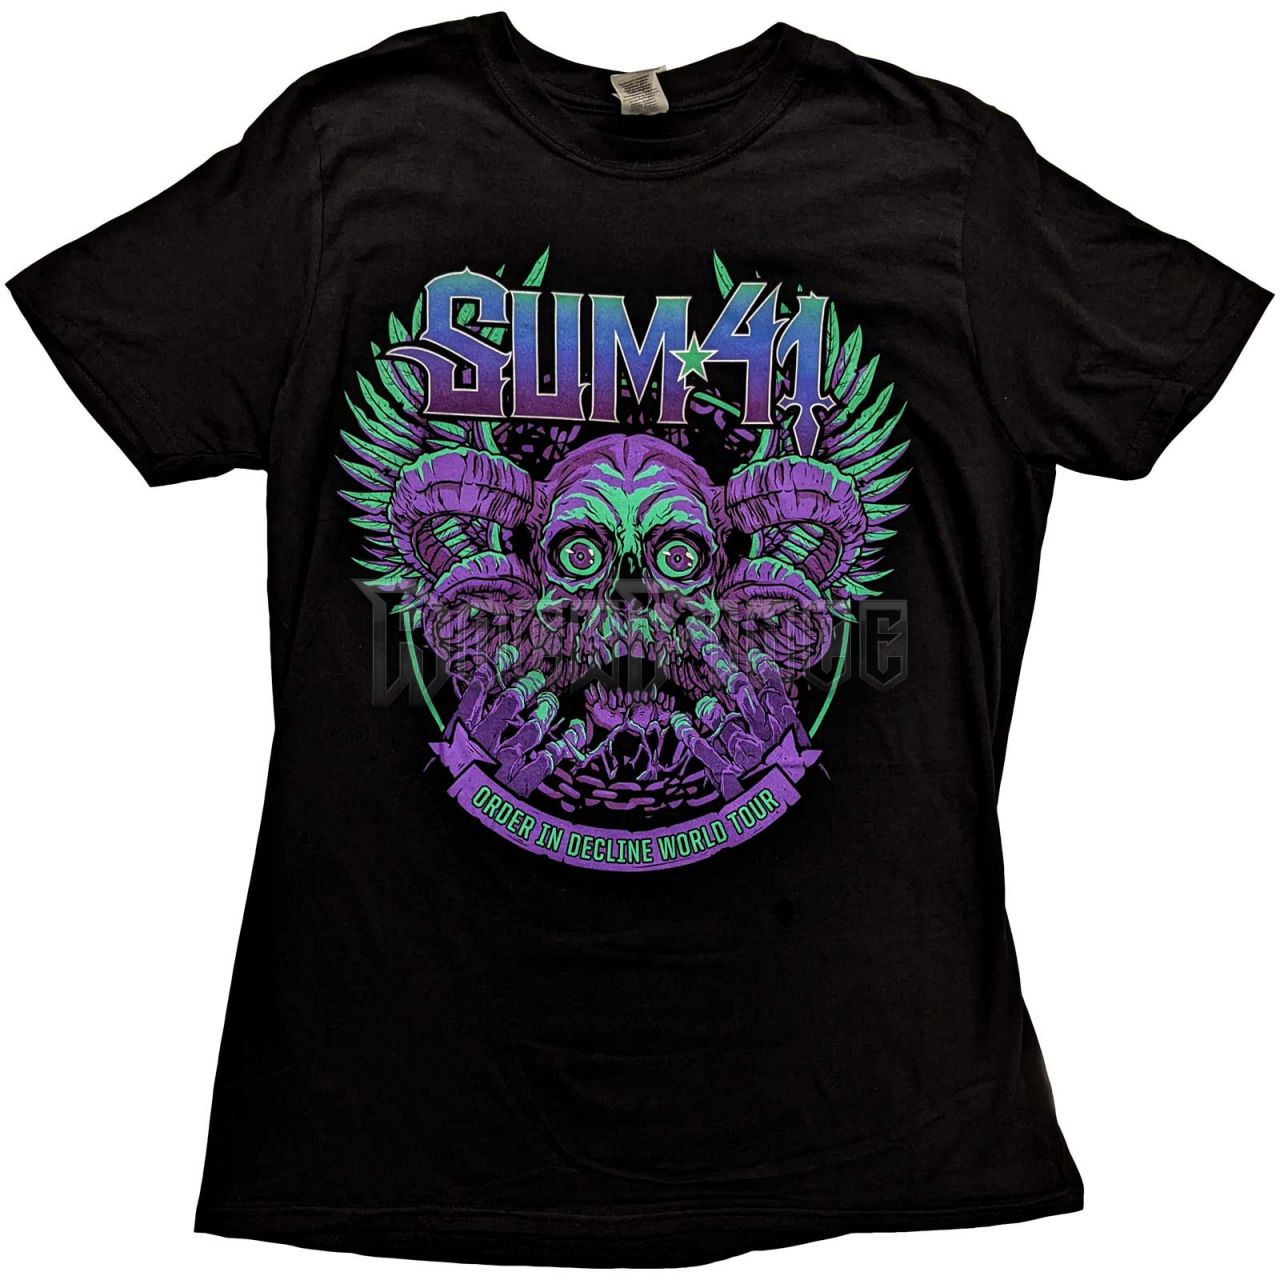 Sum 41 - Order In Decline Tour 2020 Purple Skull - unisex póló - SUMTS07MB